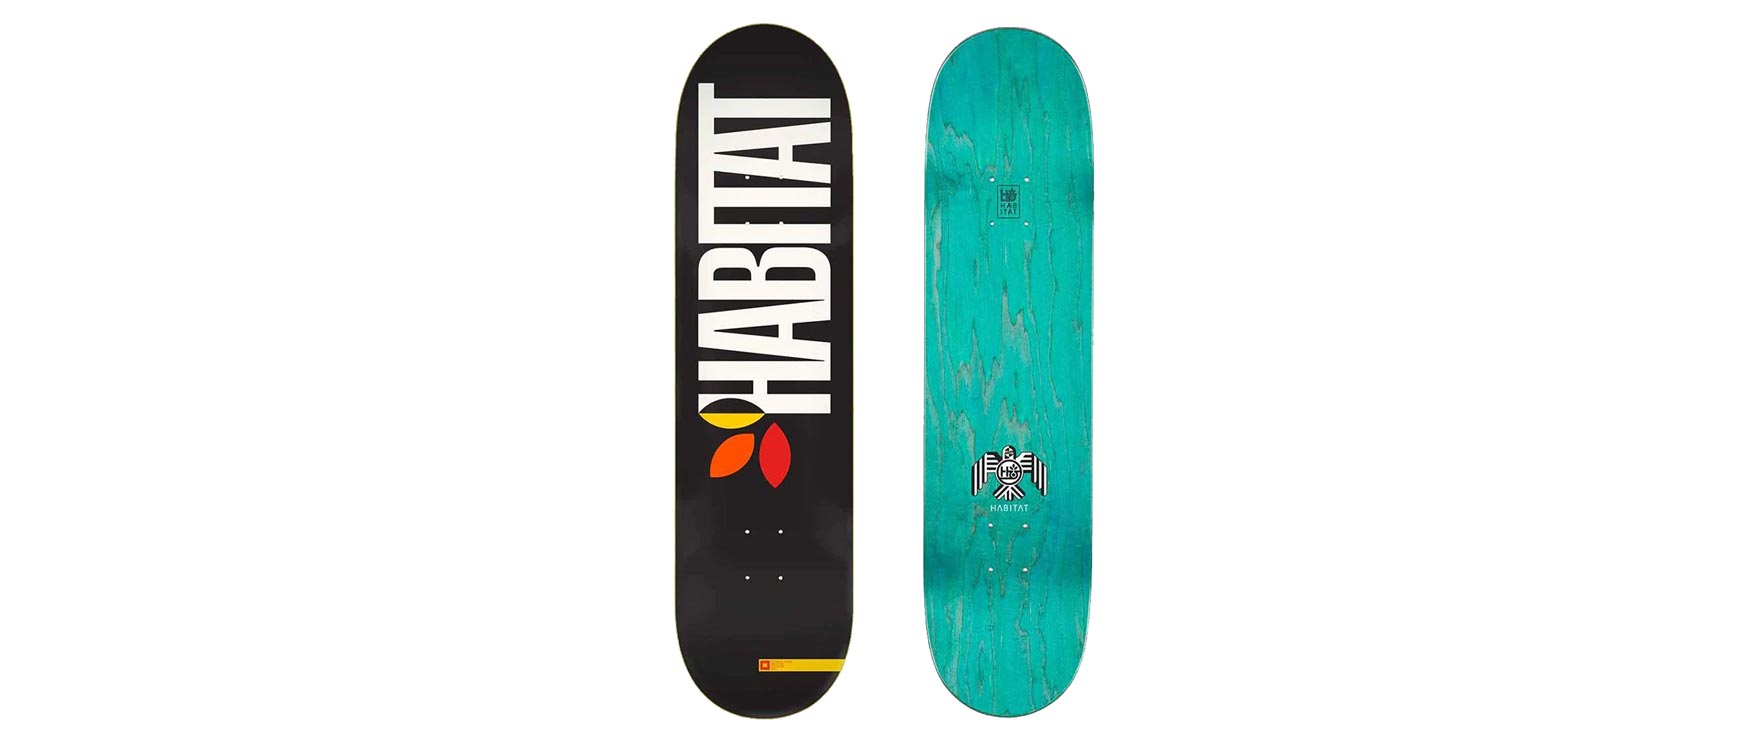 19. Habitat skateboards